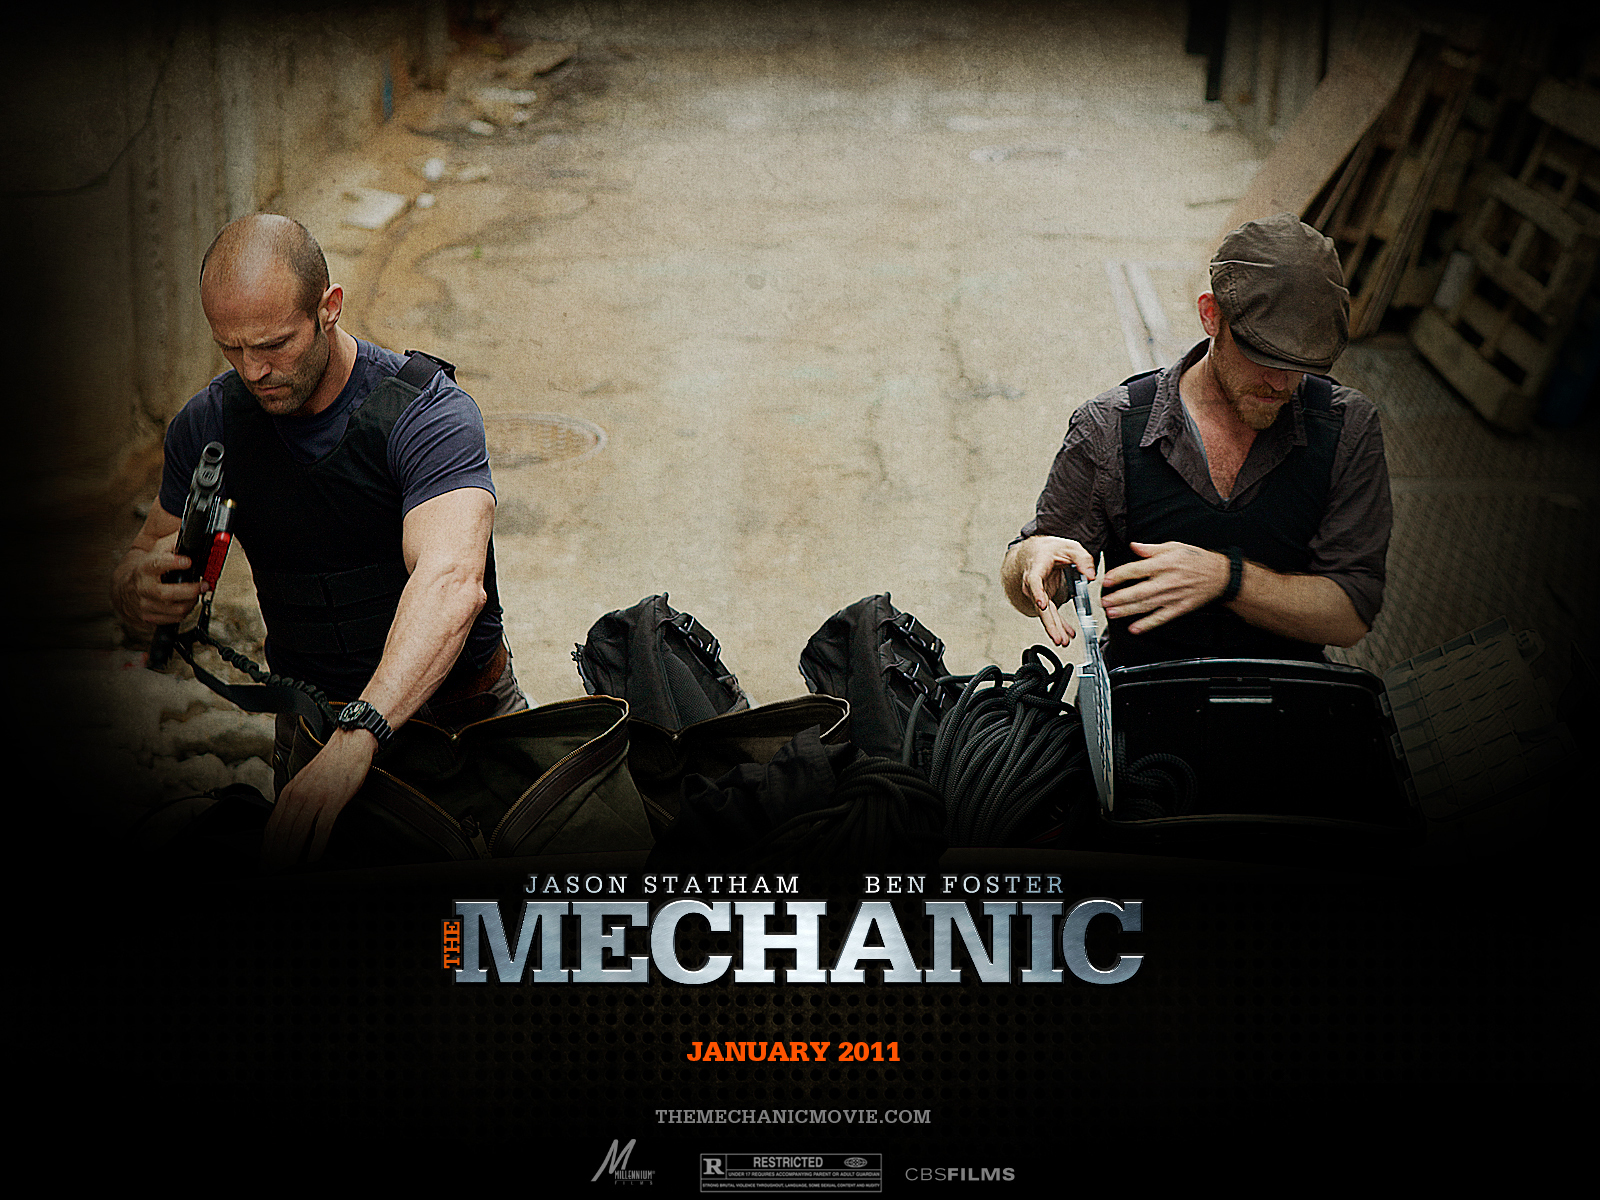 The Mechanic #7